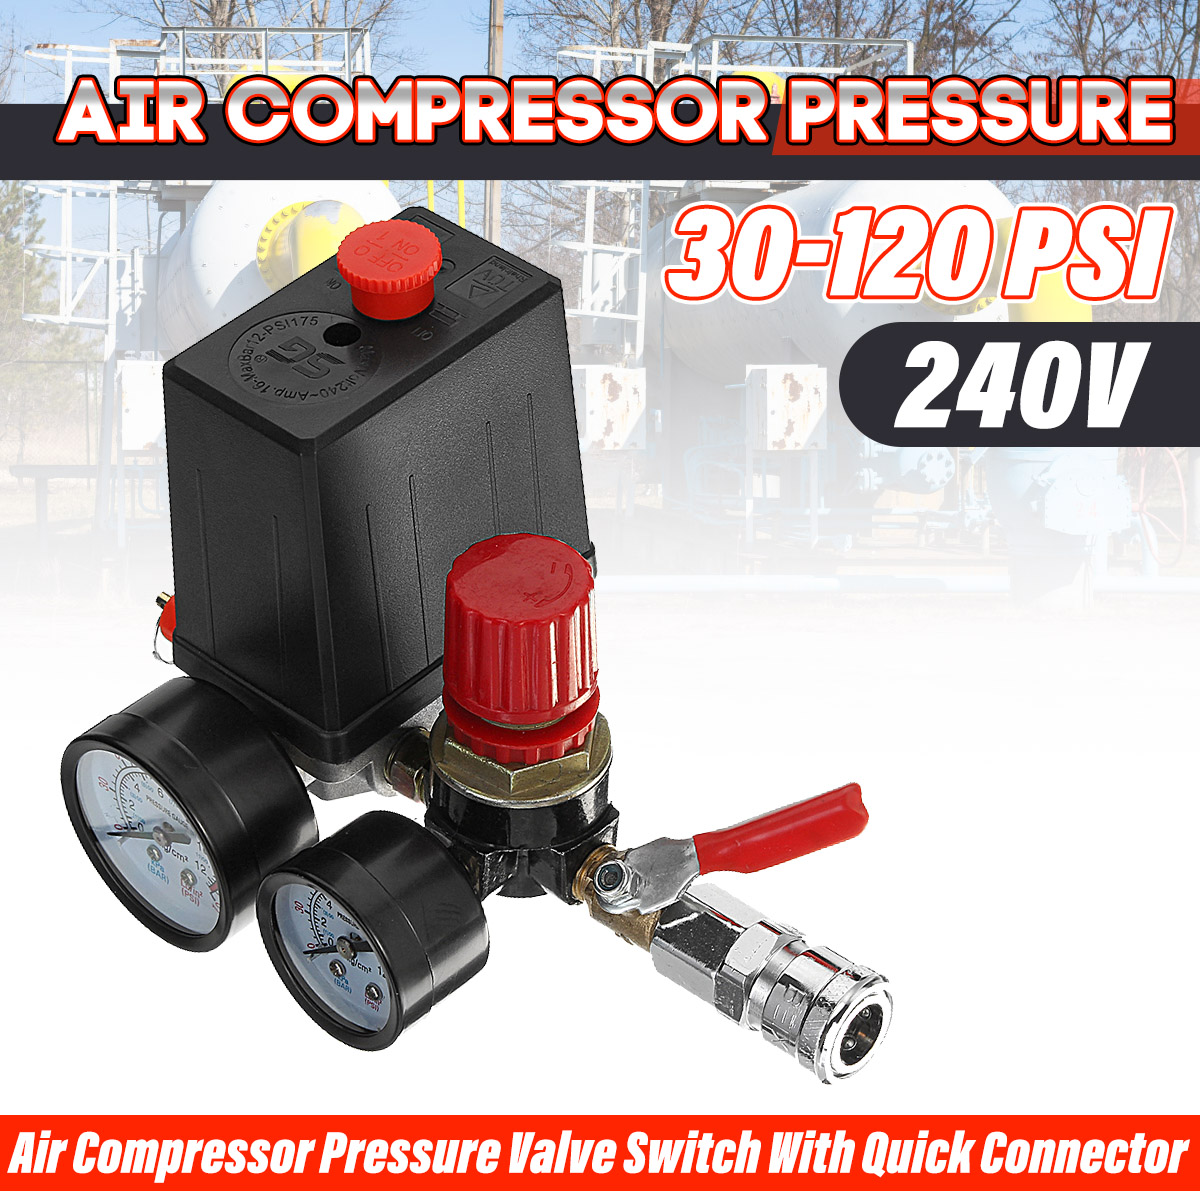 120-PSI-Air-Compressor-Pressure-Switch-Control-Valve-Manifold-Regulator-Gauges-With-Quick-Connector-1694771-1